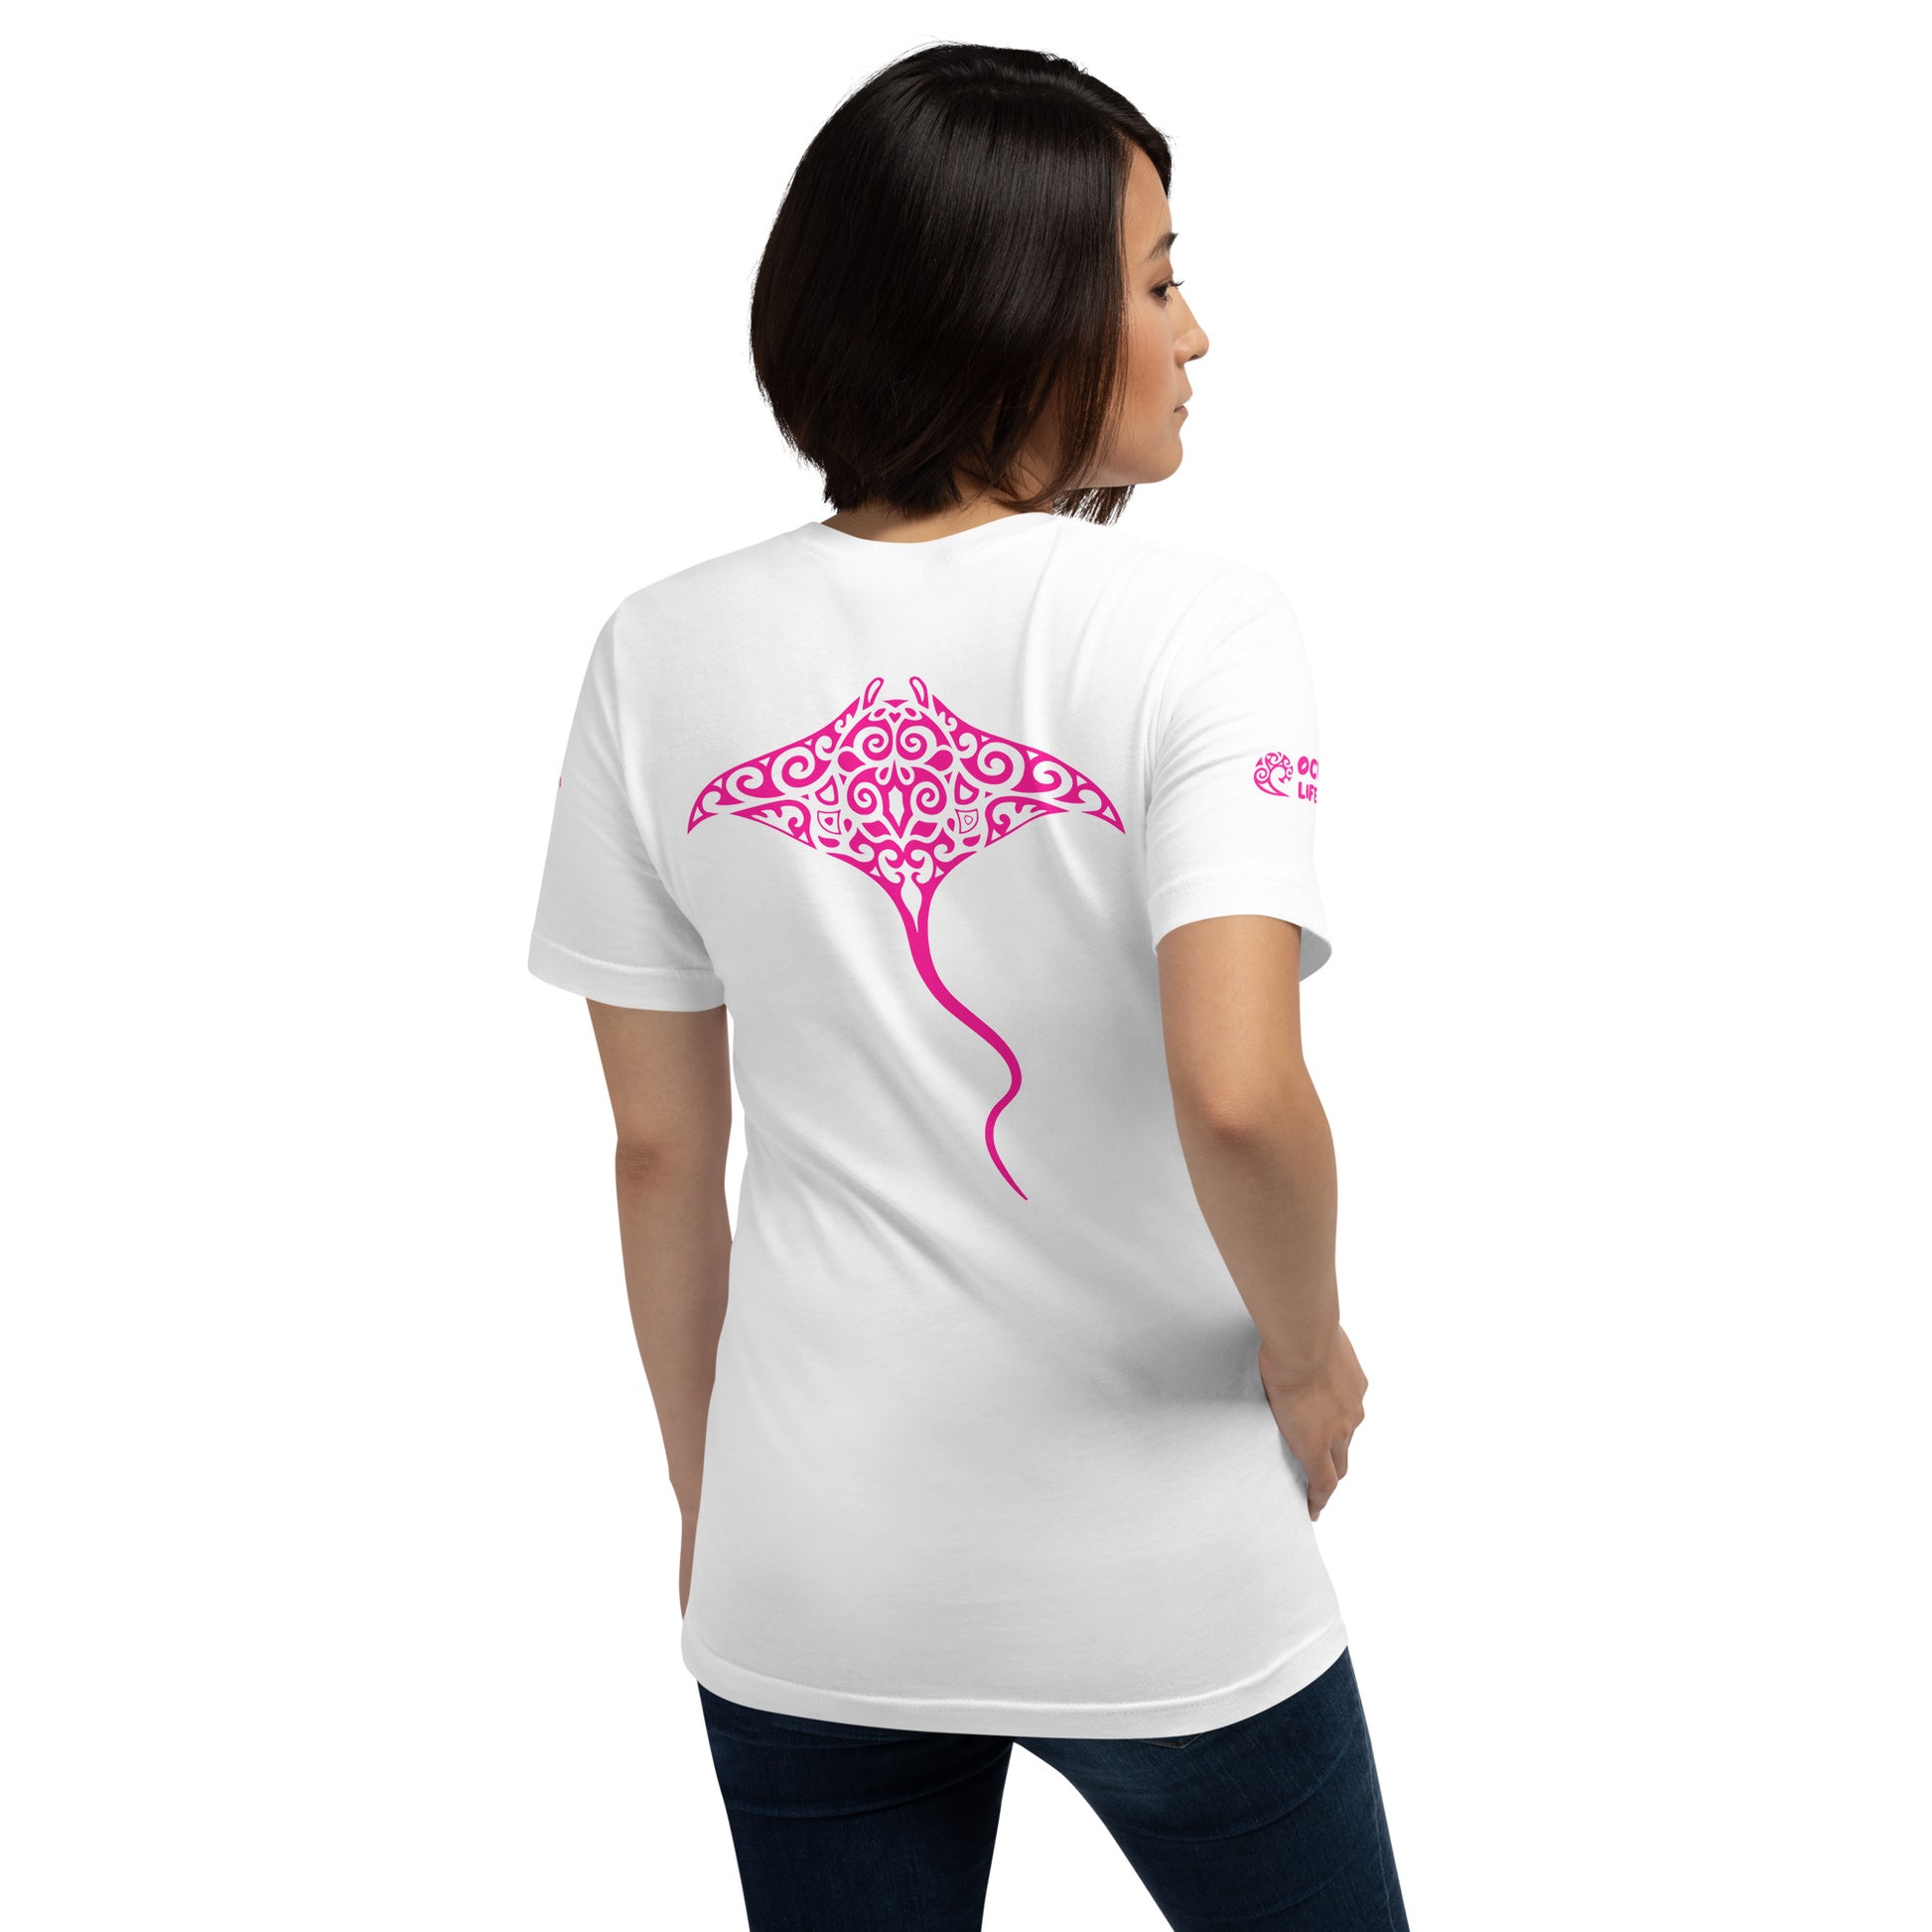 Polynesian T-shirt Manta Ray Tribal Samoan For Men and Women Back Right Pink on Black